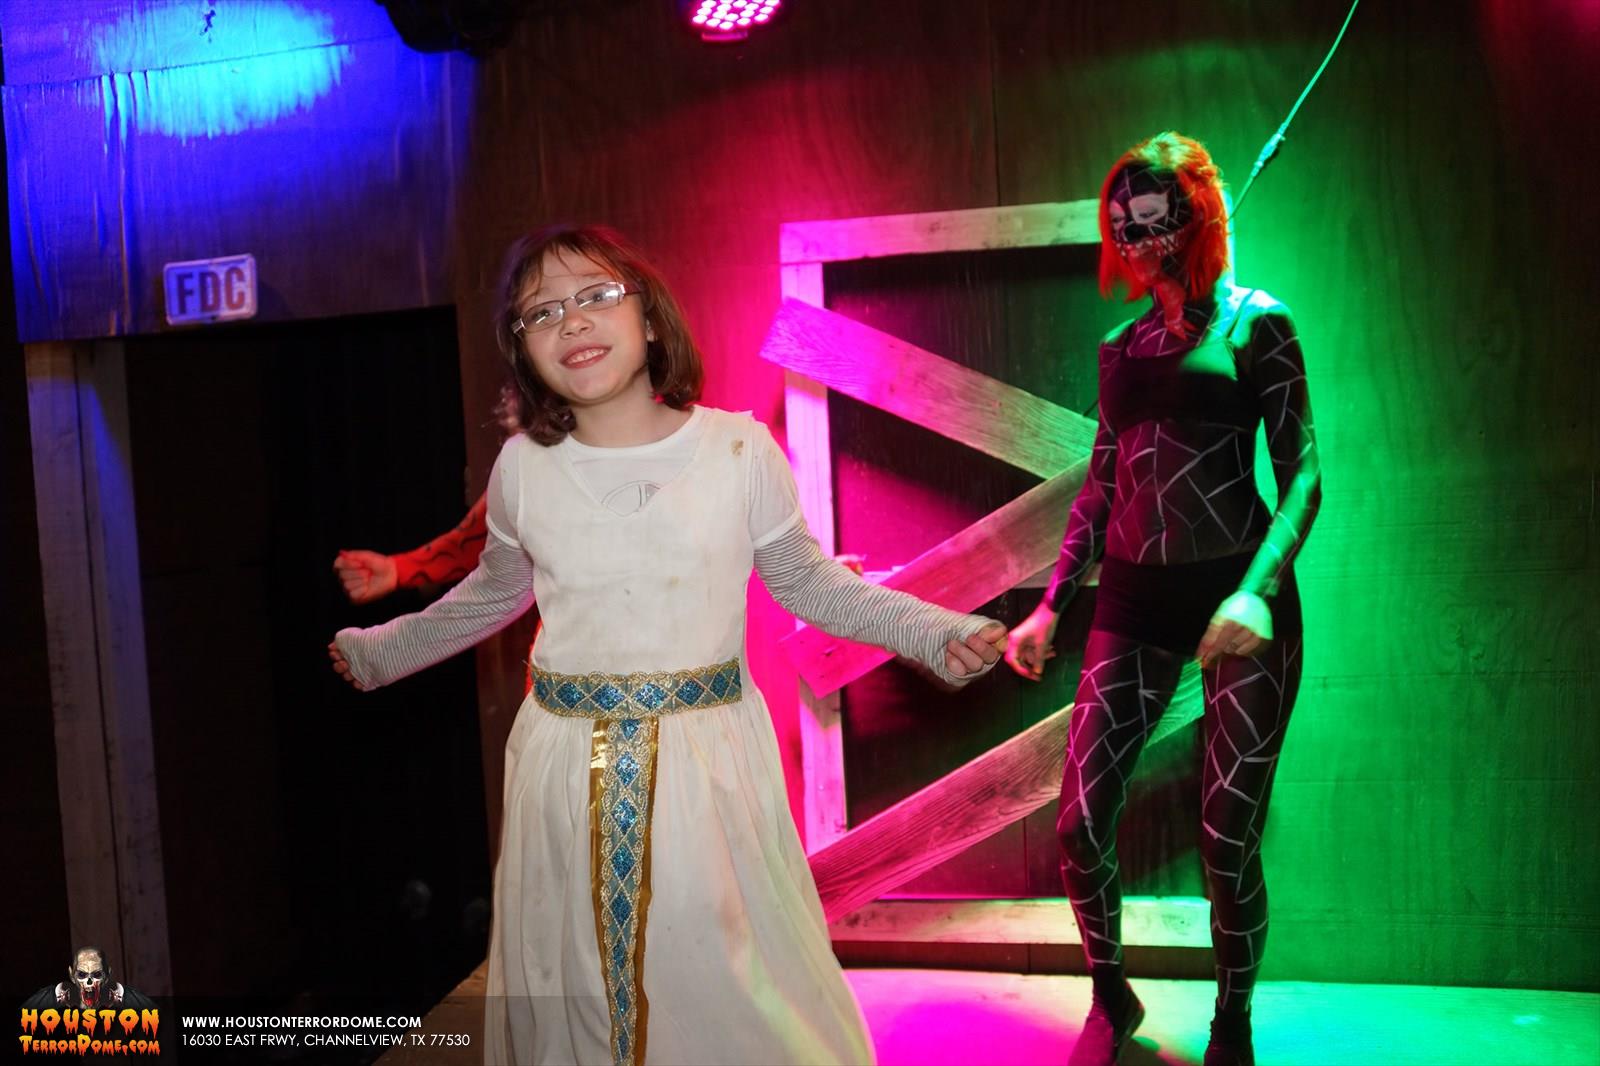 Zombie dancer and princess dancing. 